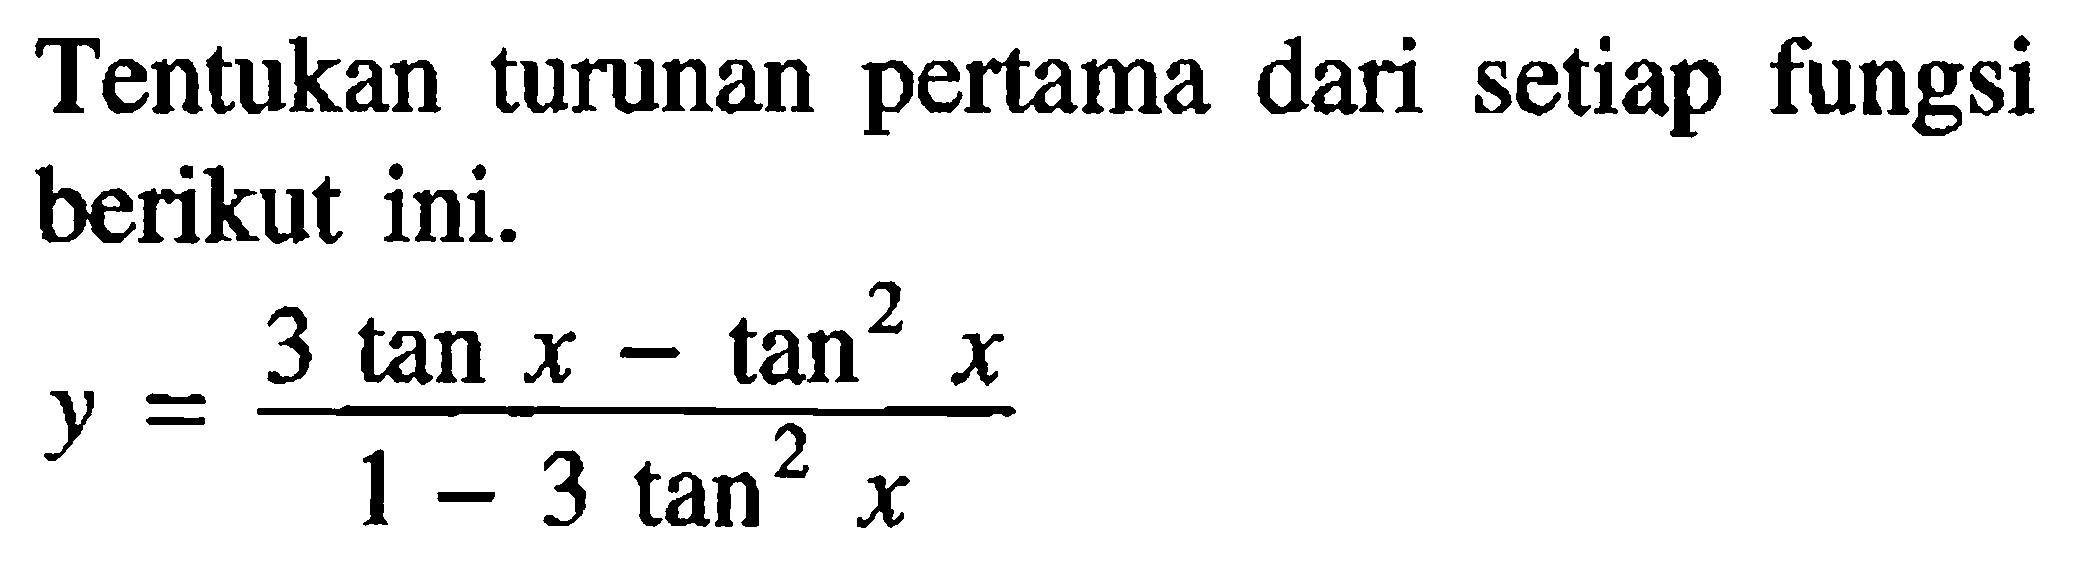 turunan pertama dari setiap fungsi Tentukan berikut ini. y=(3 tan x-tan^2 x)/(1-3 tan^2 x)